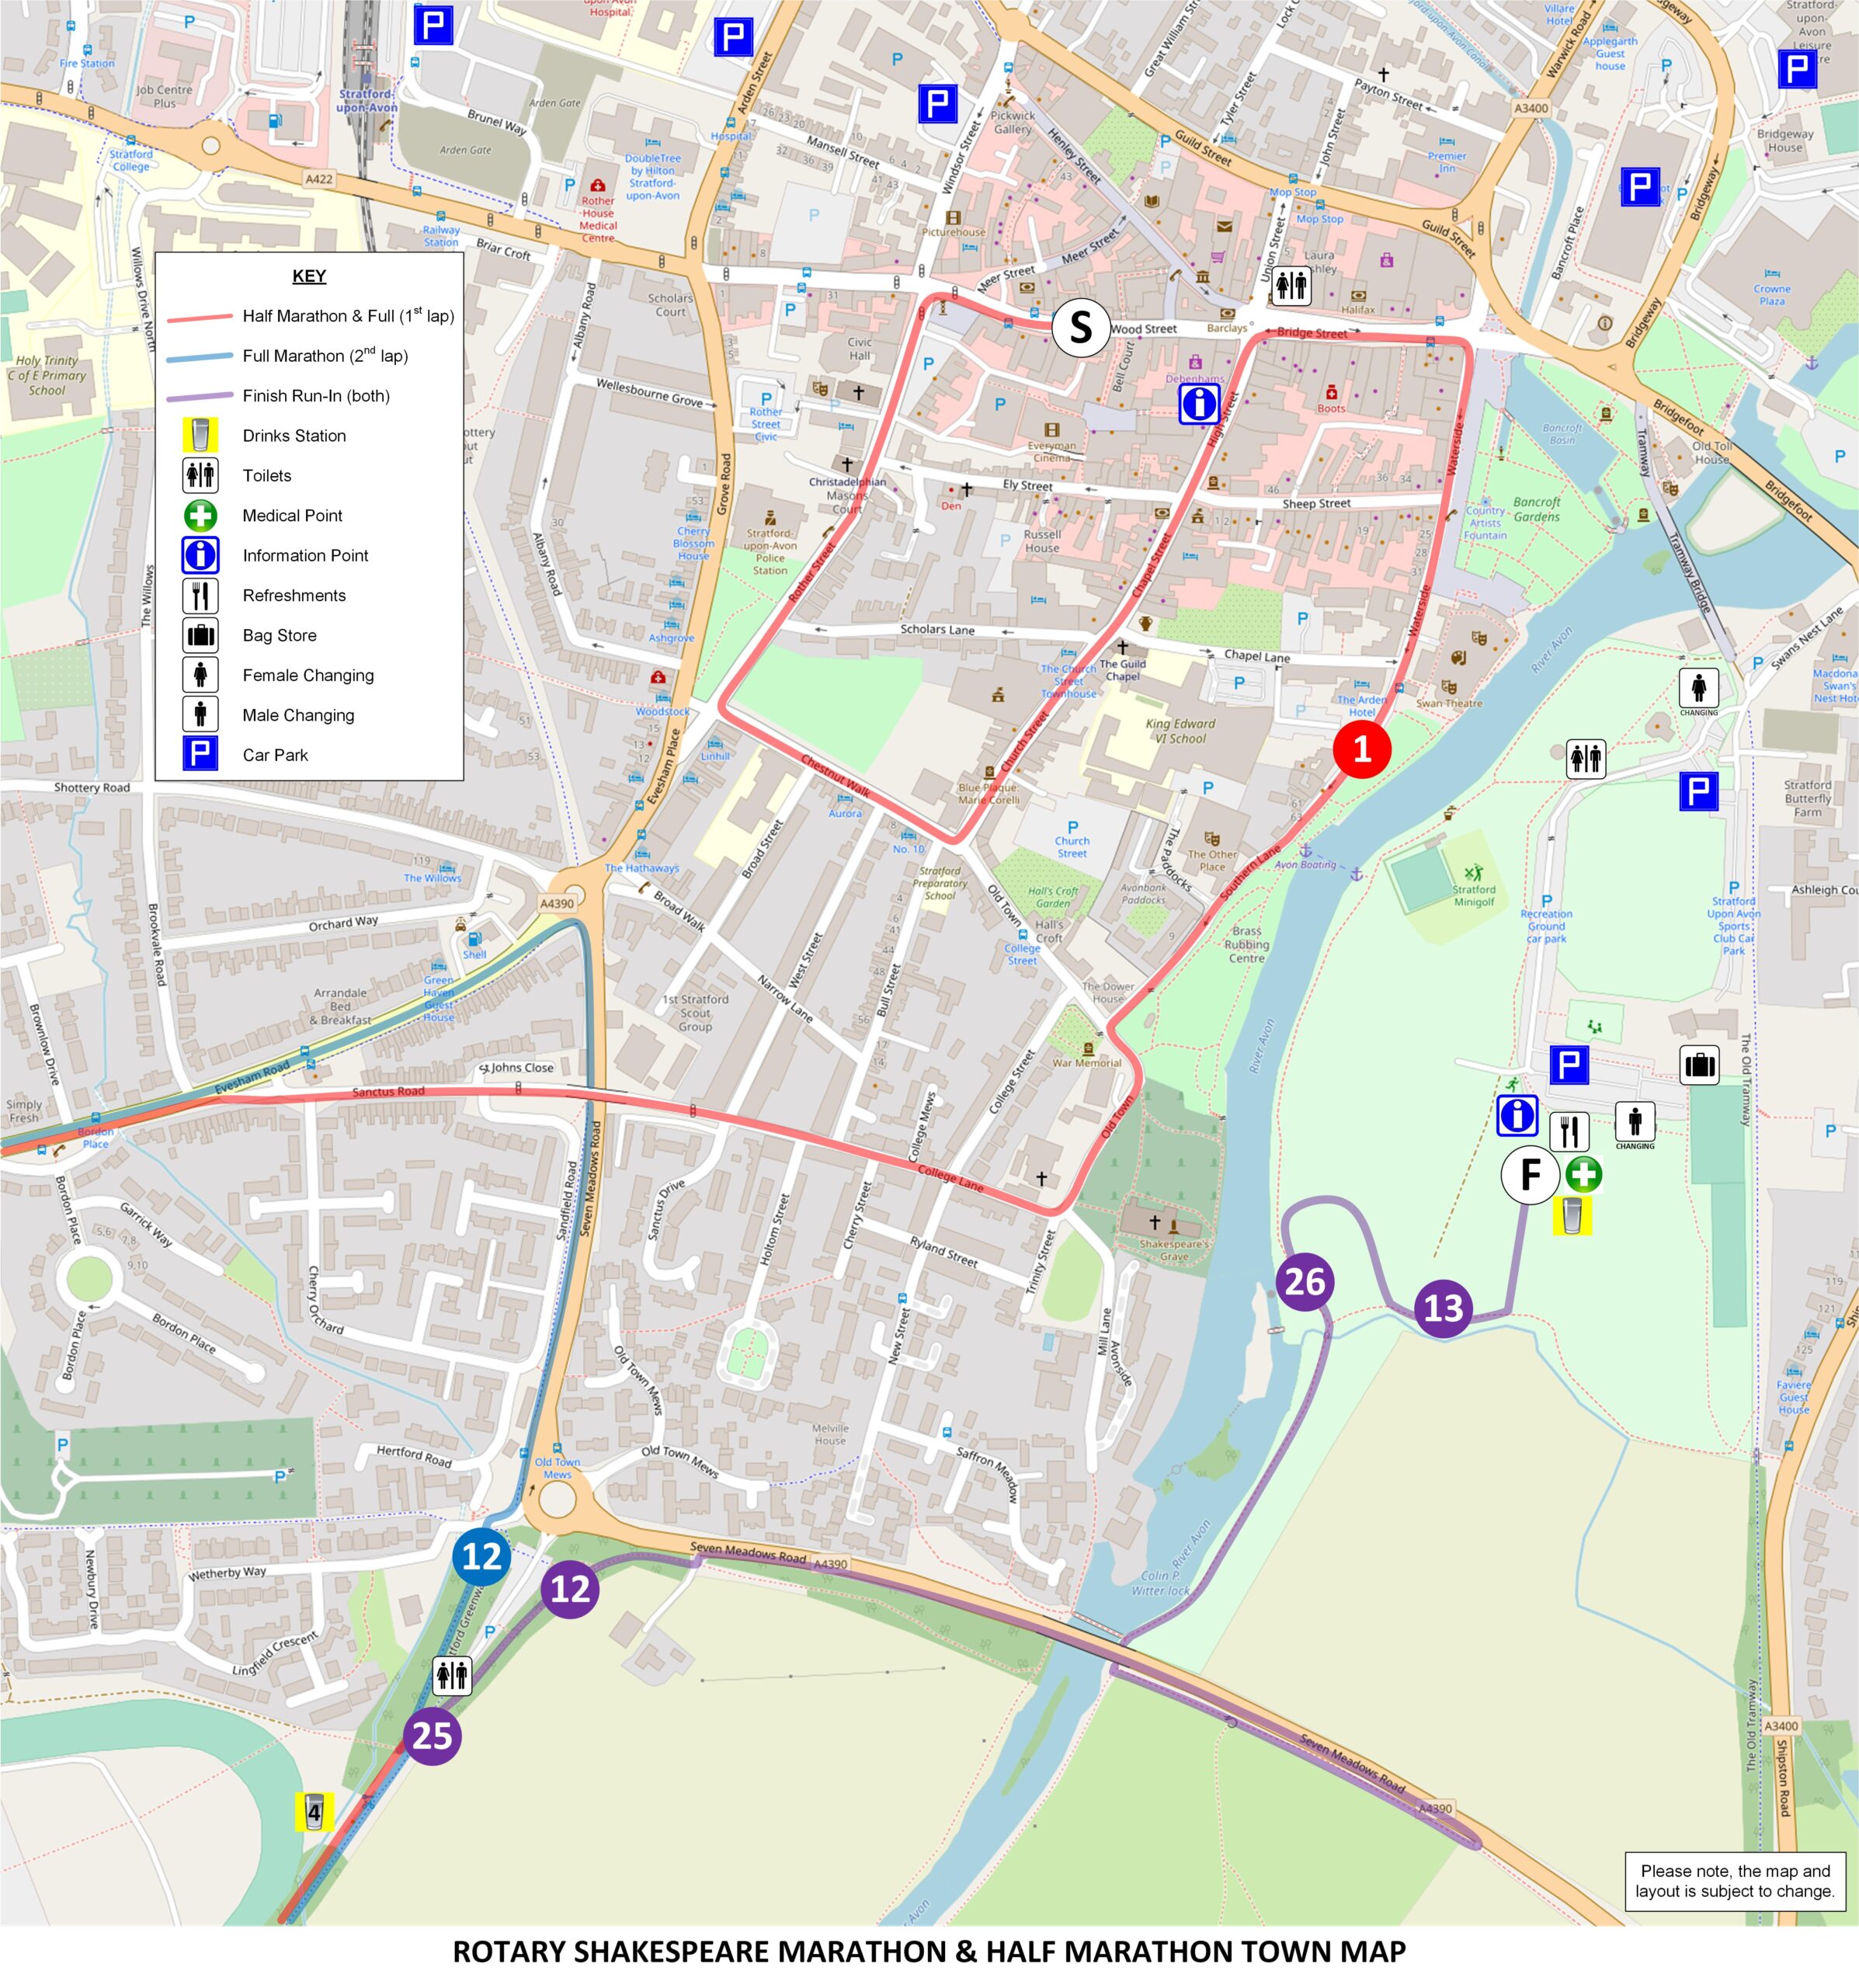 Shakespeare marathon town map stratford-upon-avon